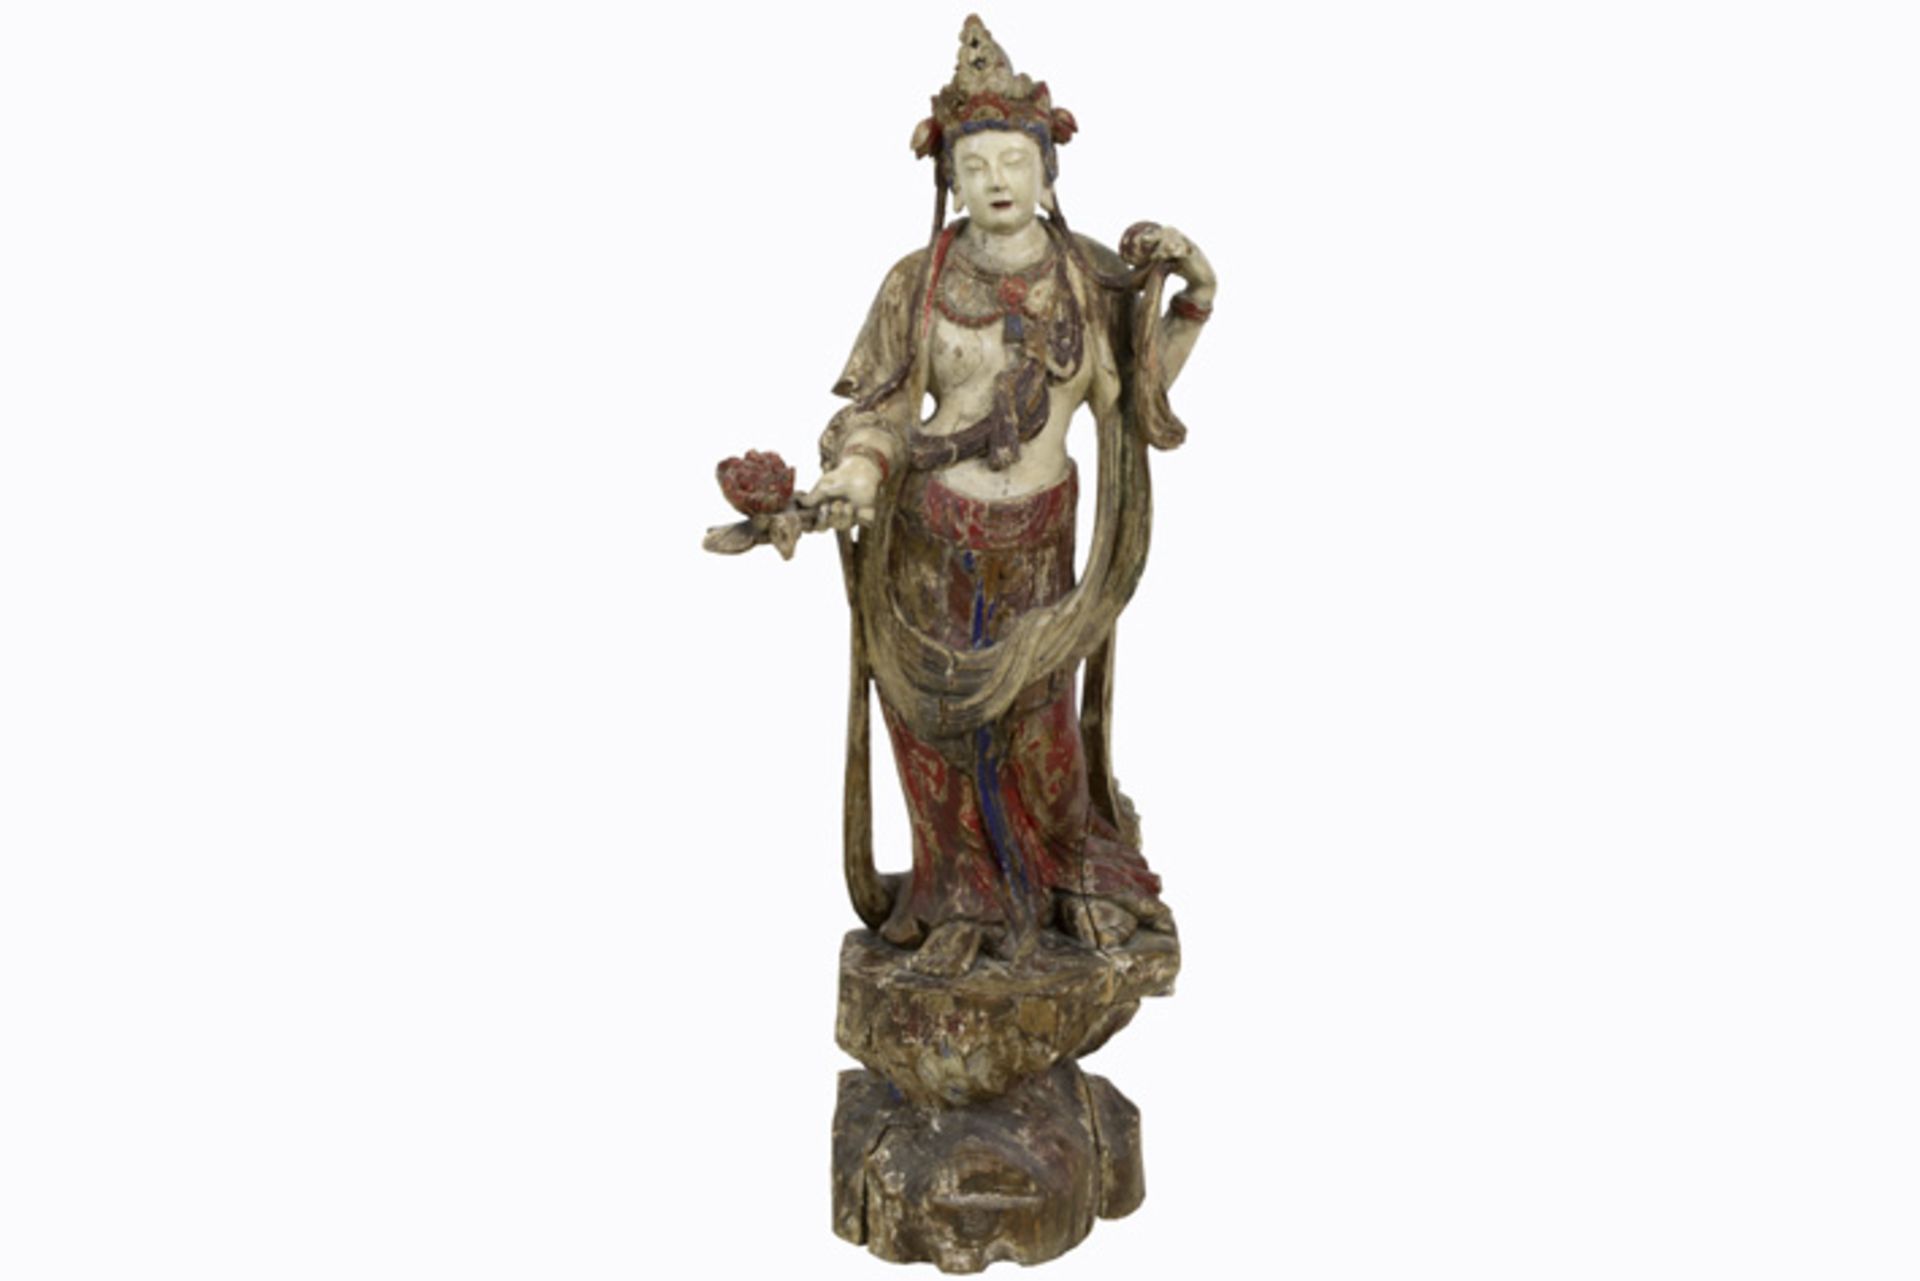 CHINA - QING-DYNASTIE (1644 - 1912) vrij grote sculptuur in hout met goedbewaarde originele